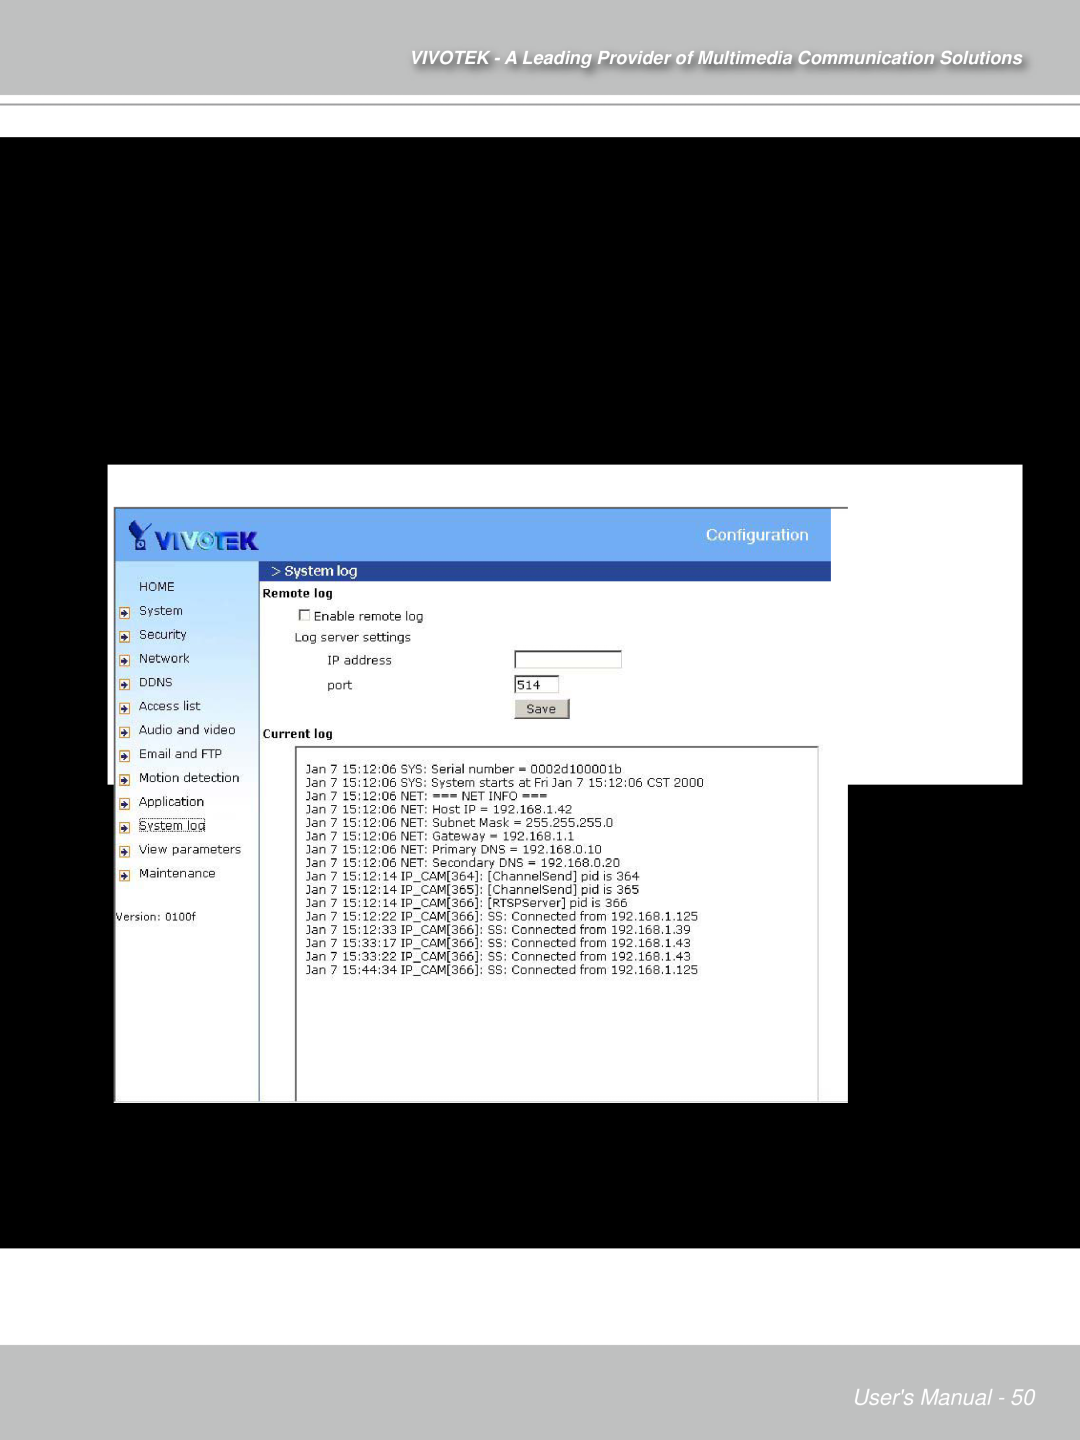 Vivotek IP7132 manual System log, Users Manual 